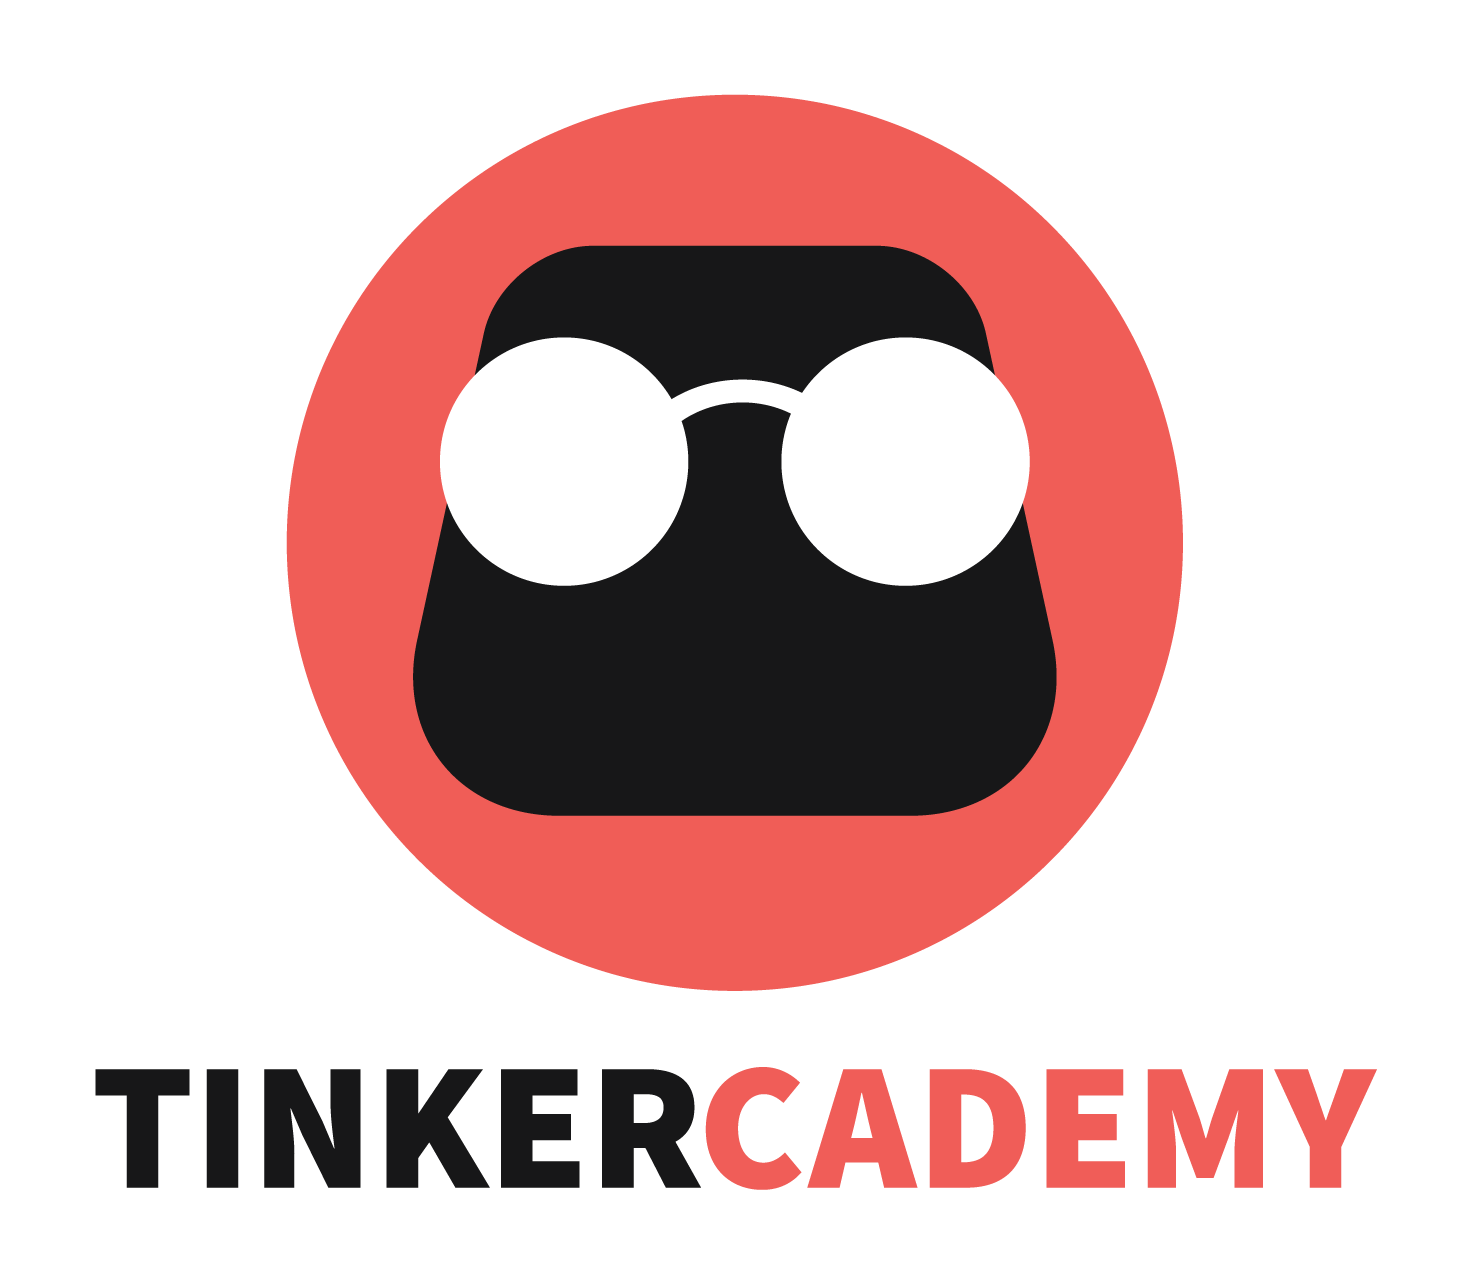 Tinkercademy website